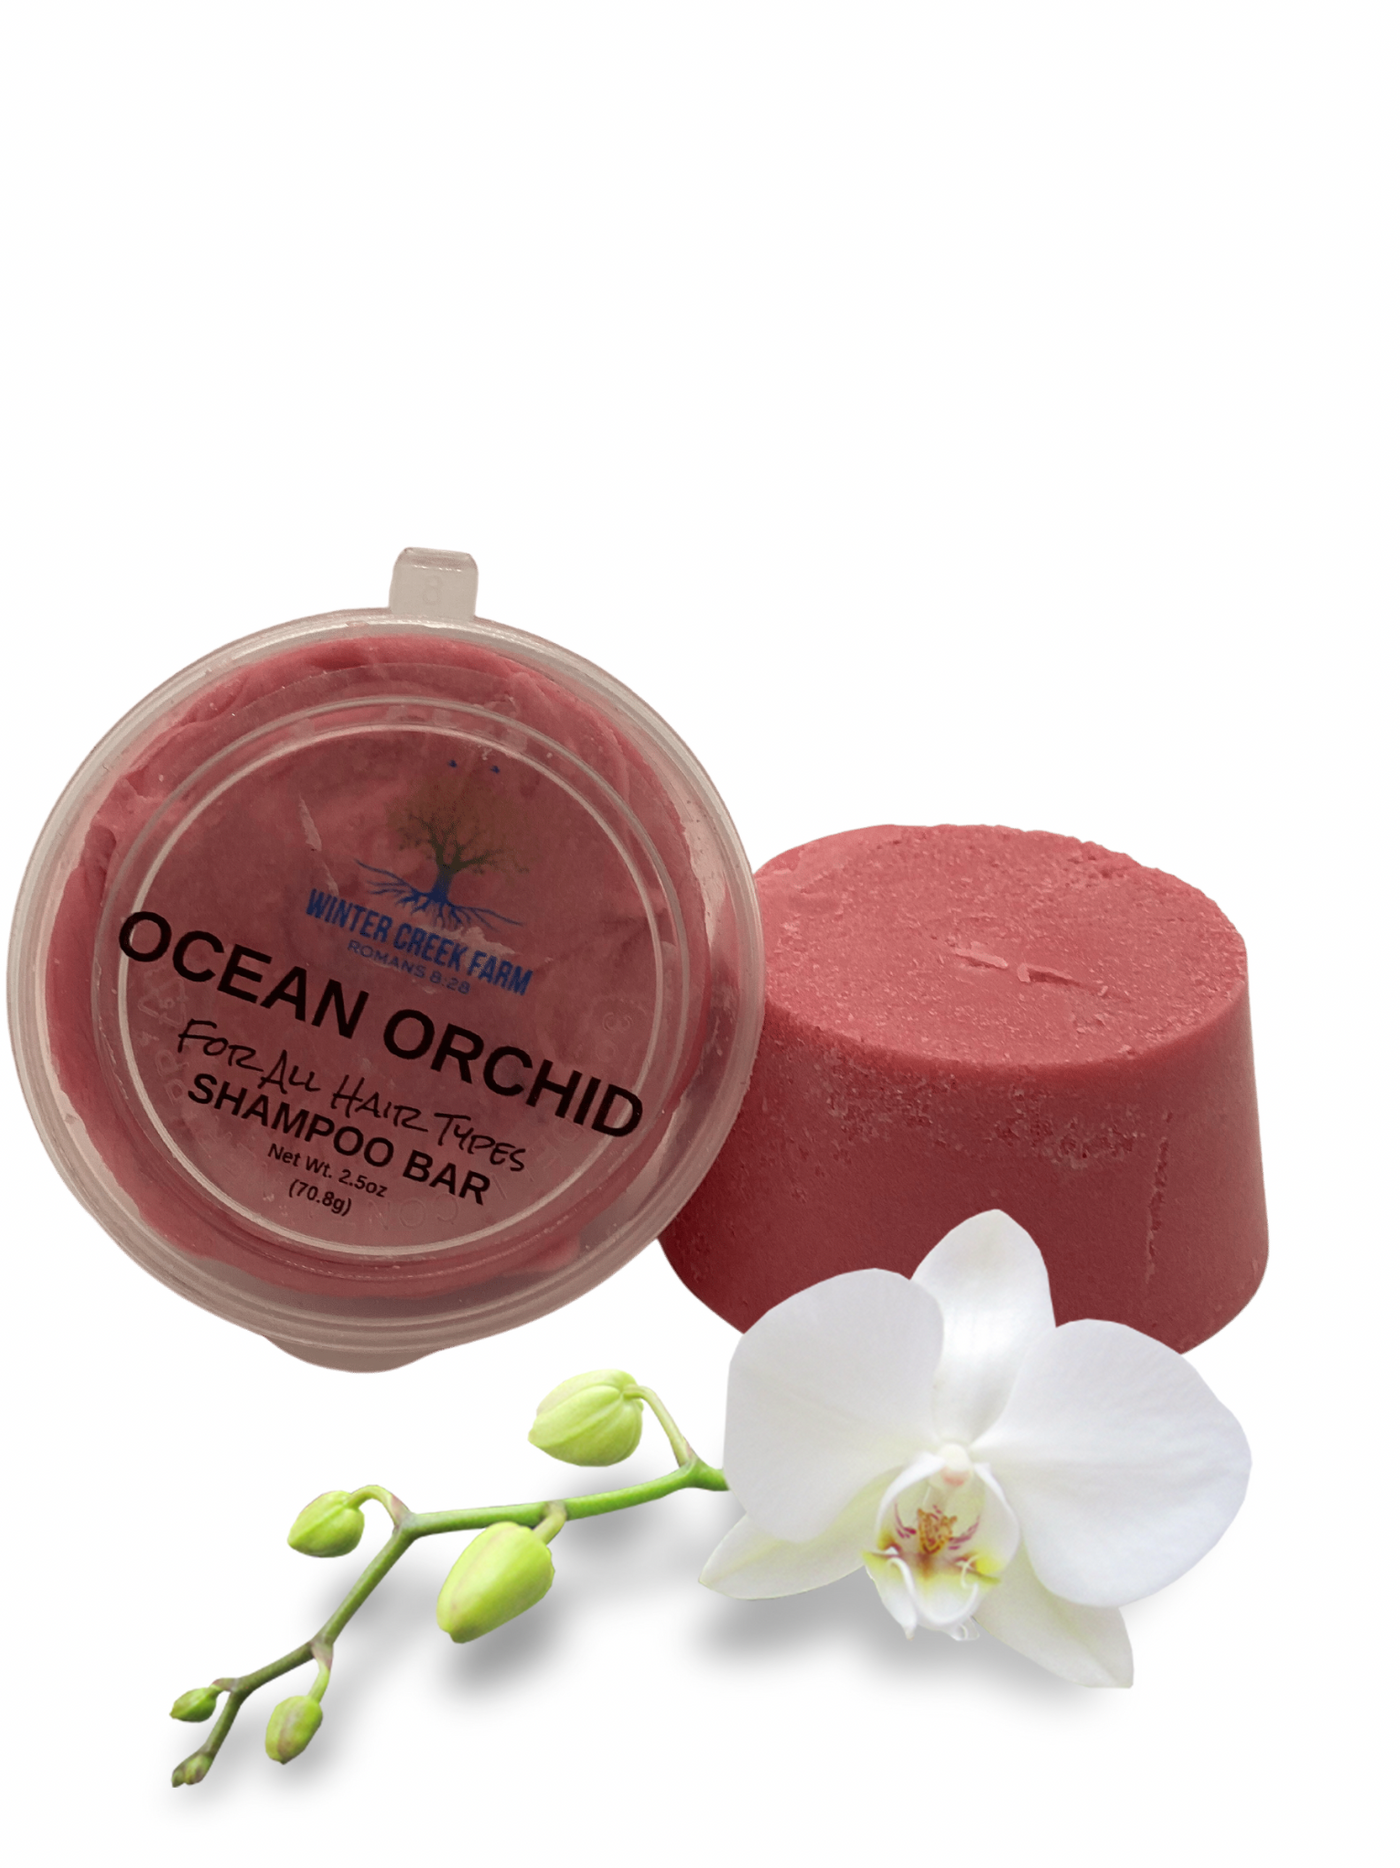 Ocean Orchid Shampoo Bar